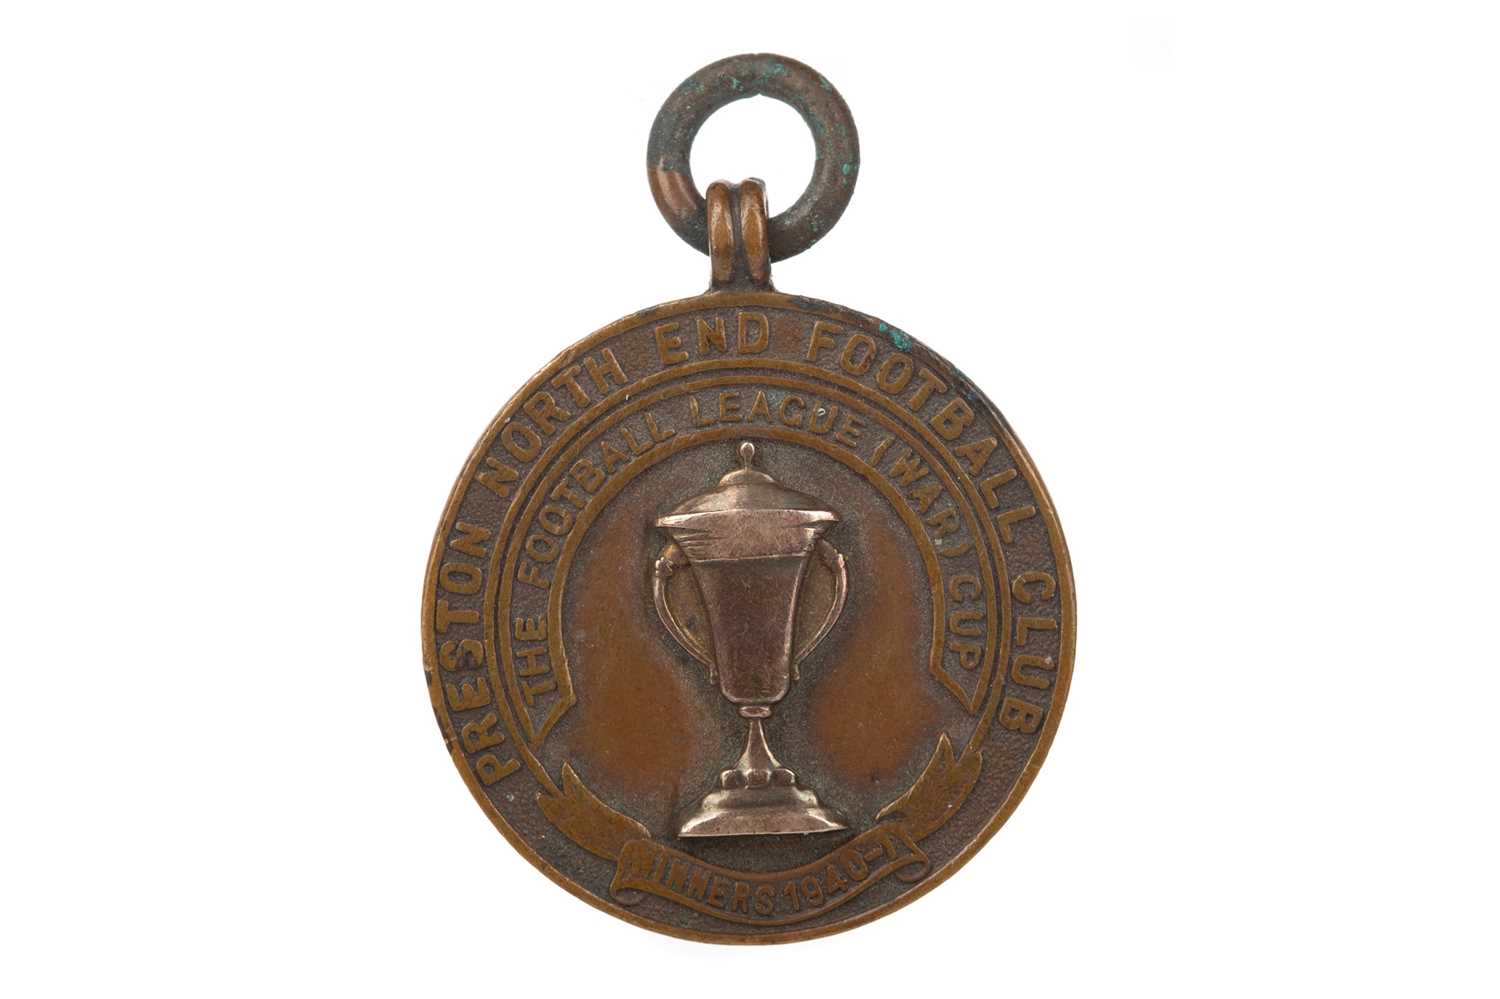 Lot 1716 - JAMES TAYLOR OF PRESTON NORTH END F.C., IMPORTANT FOOTBALL LEAGUE (WAR) CUP BRONZE MEDAL